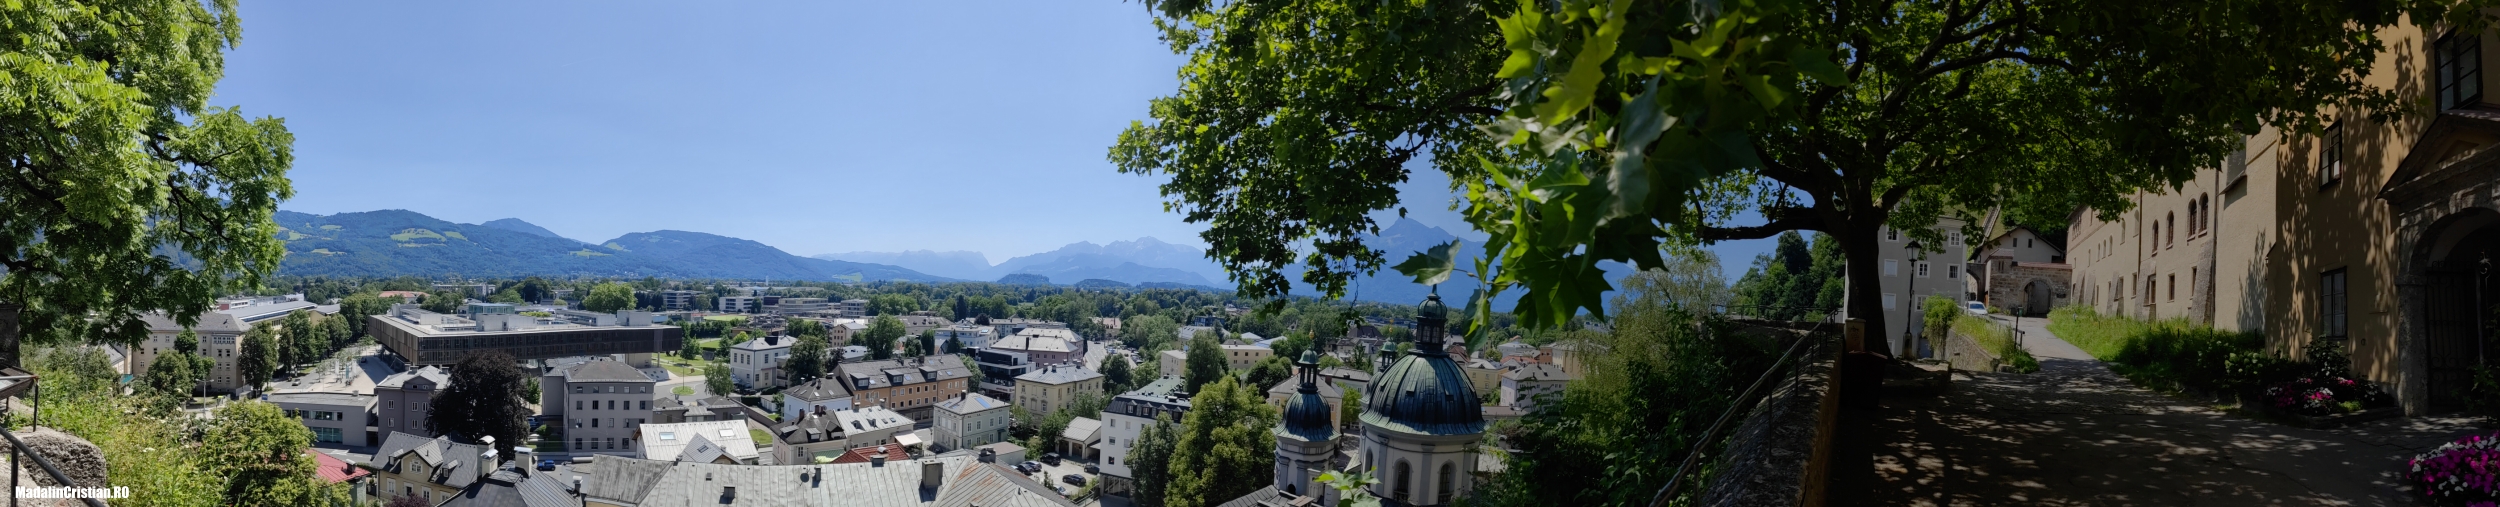 Am vizitat orașul Salzburg